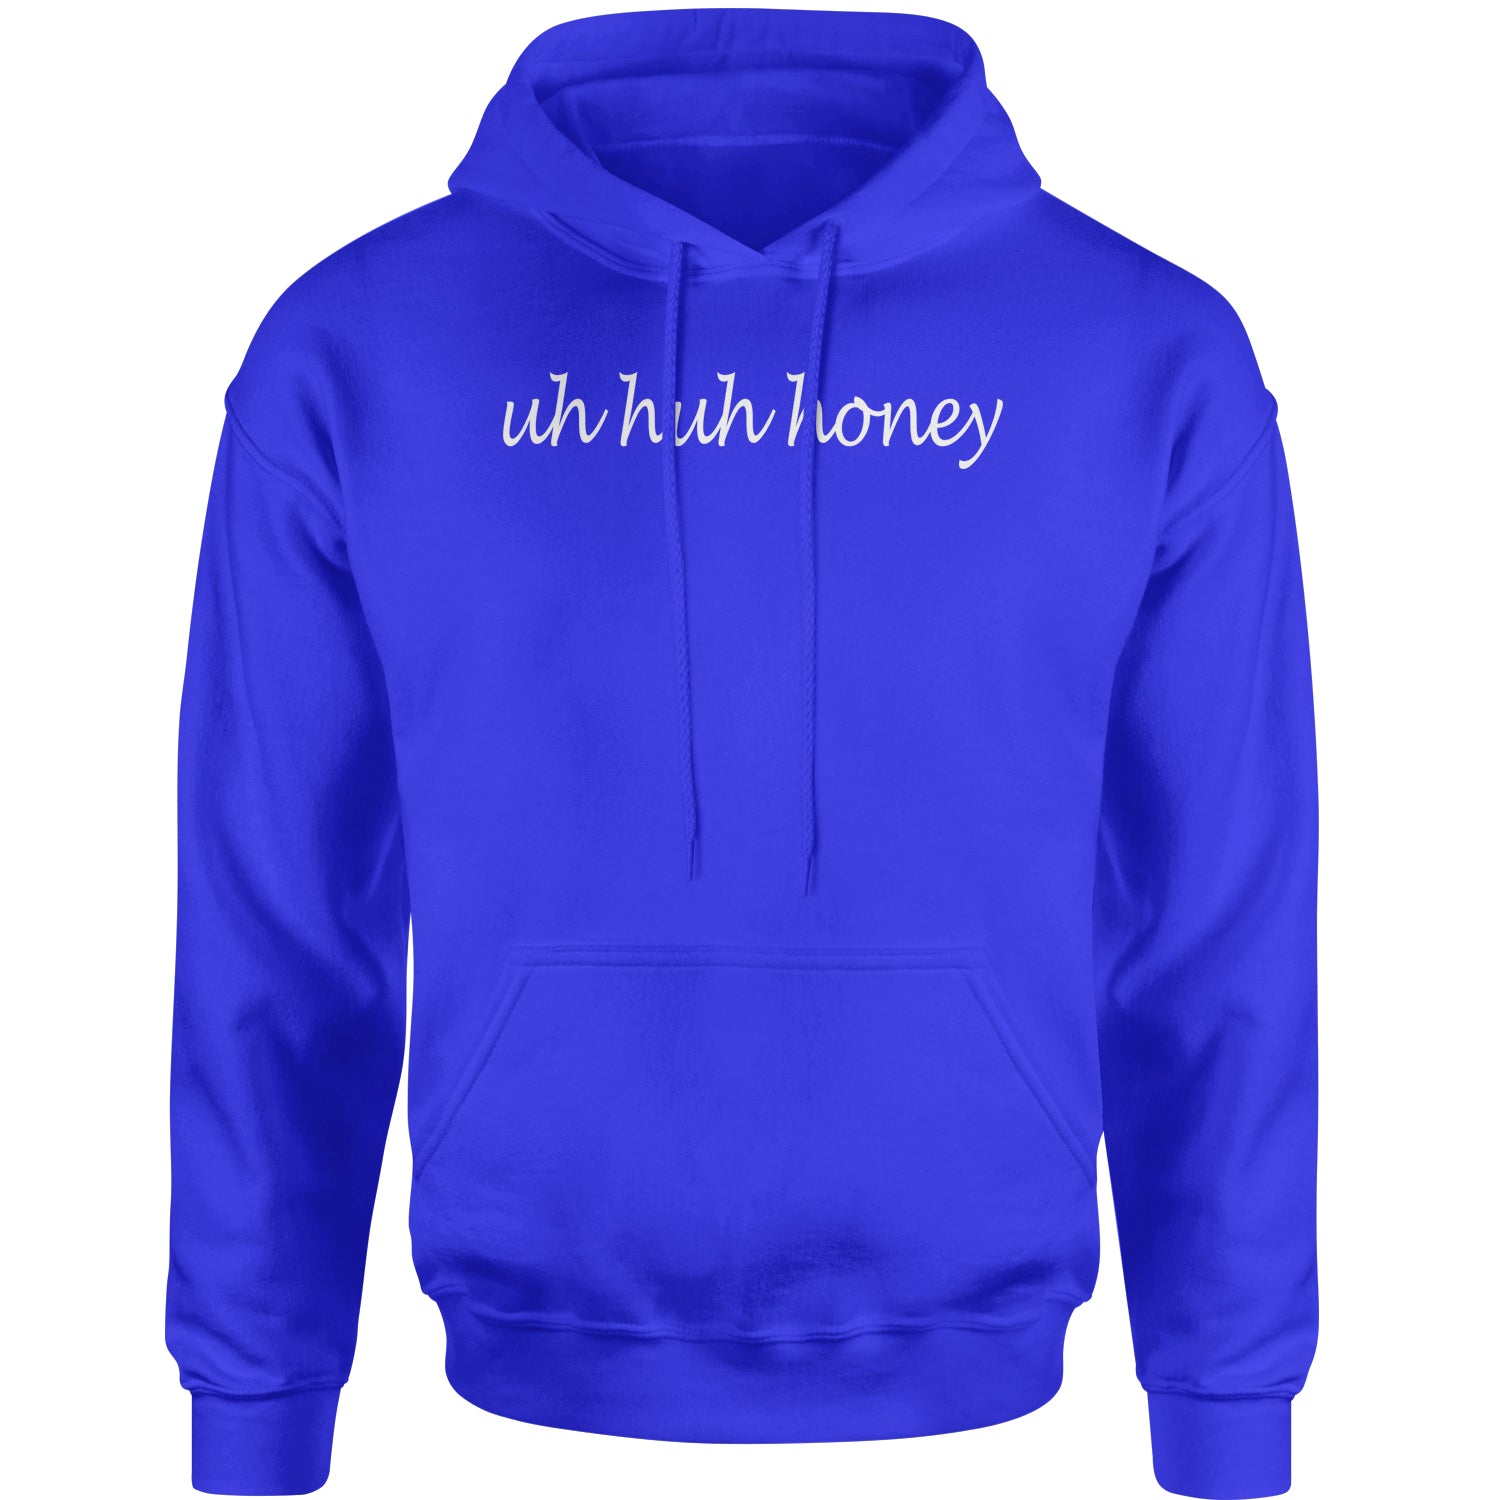 Uh Huh Honey Adult Hoodie Sweatshirt uhhuh, uhuh, unhunh by Expression Tees